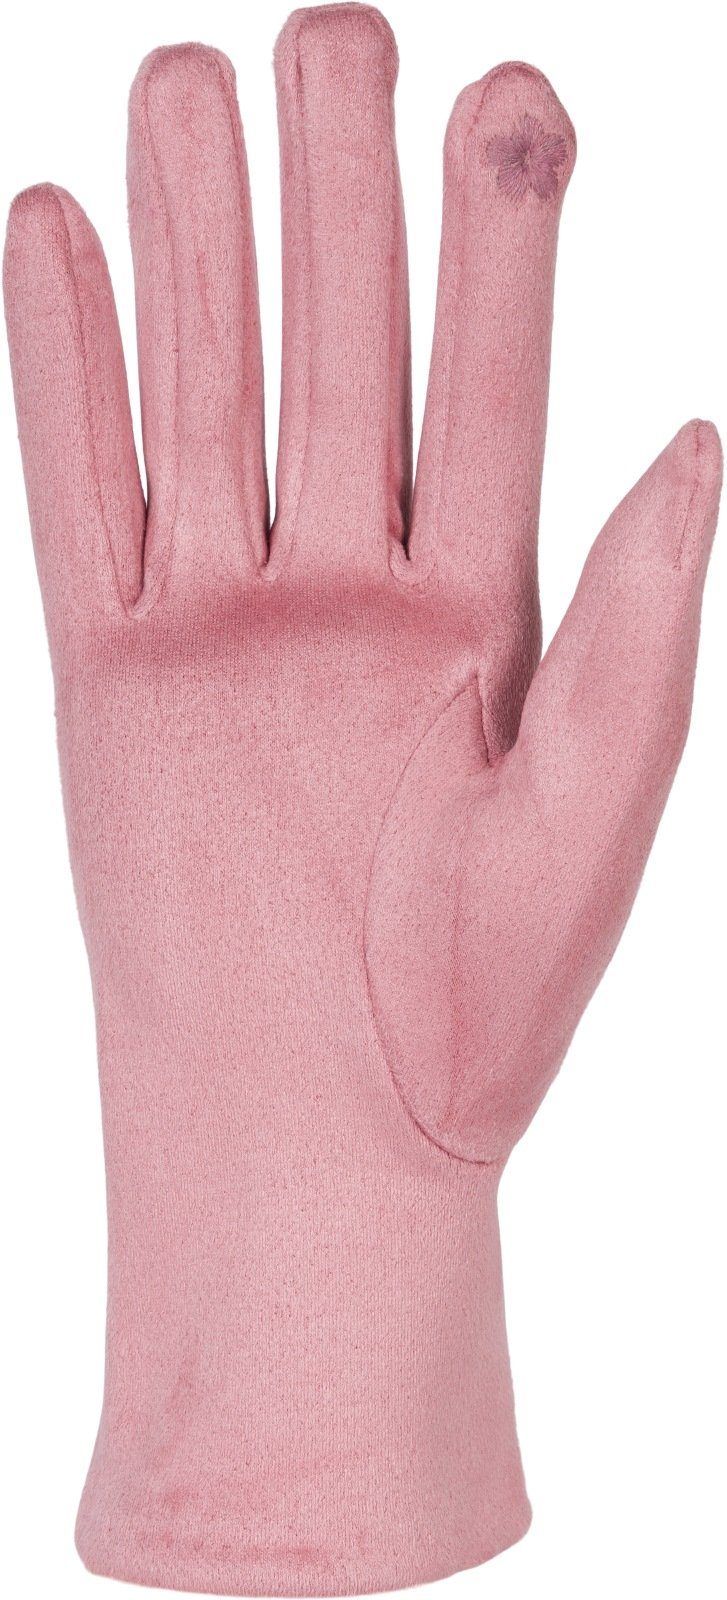 styleBREAKER Fleecehandschuhe Einfarbige Touchscreen Handschuhe Altrose Ziernähte